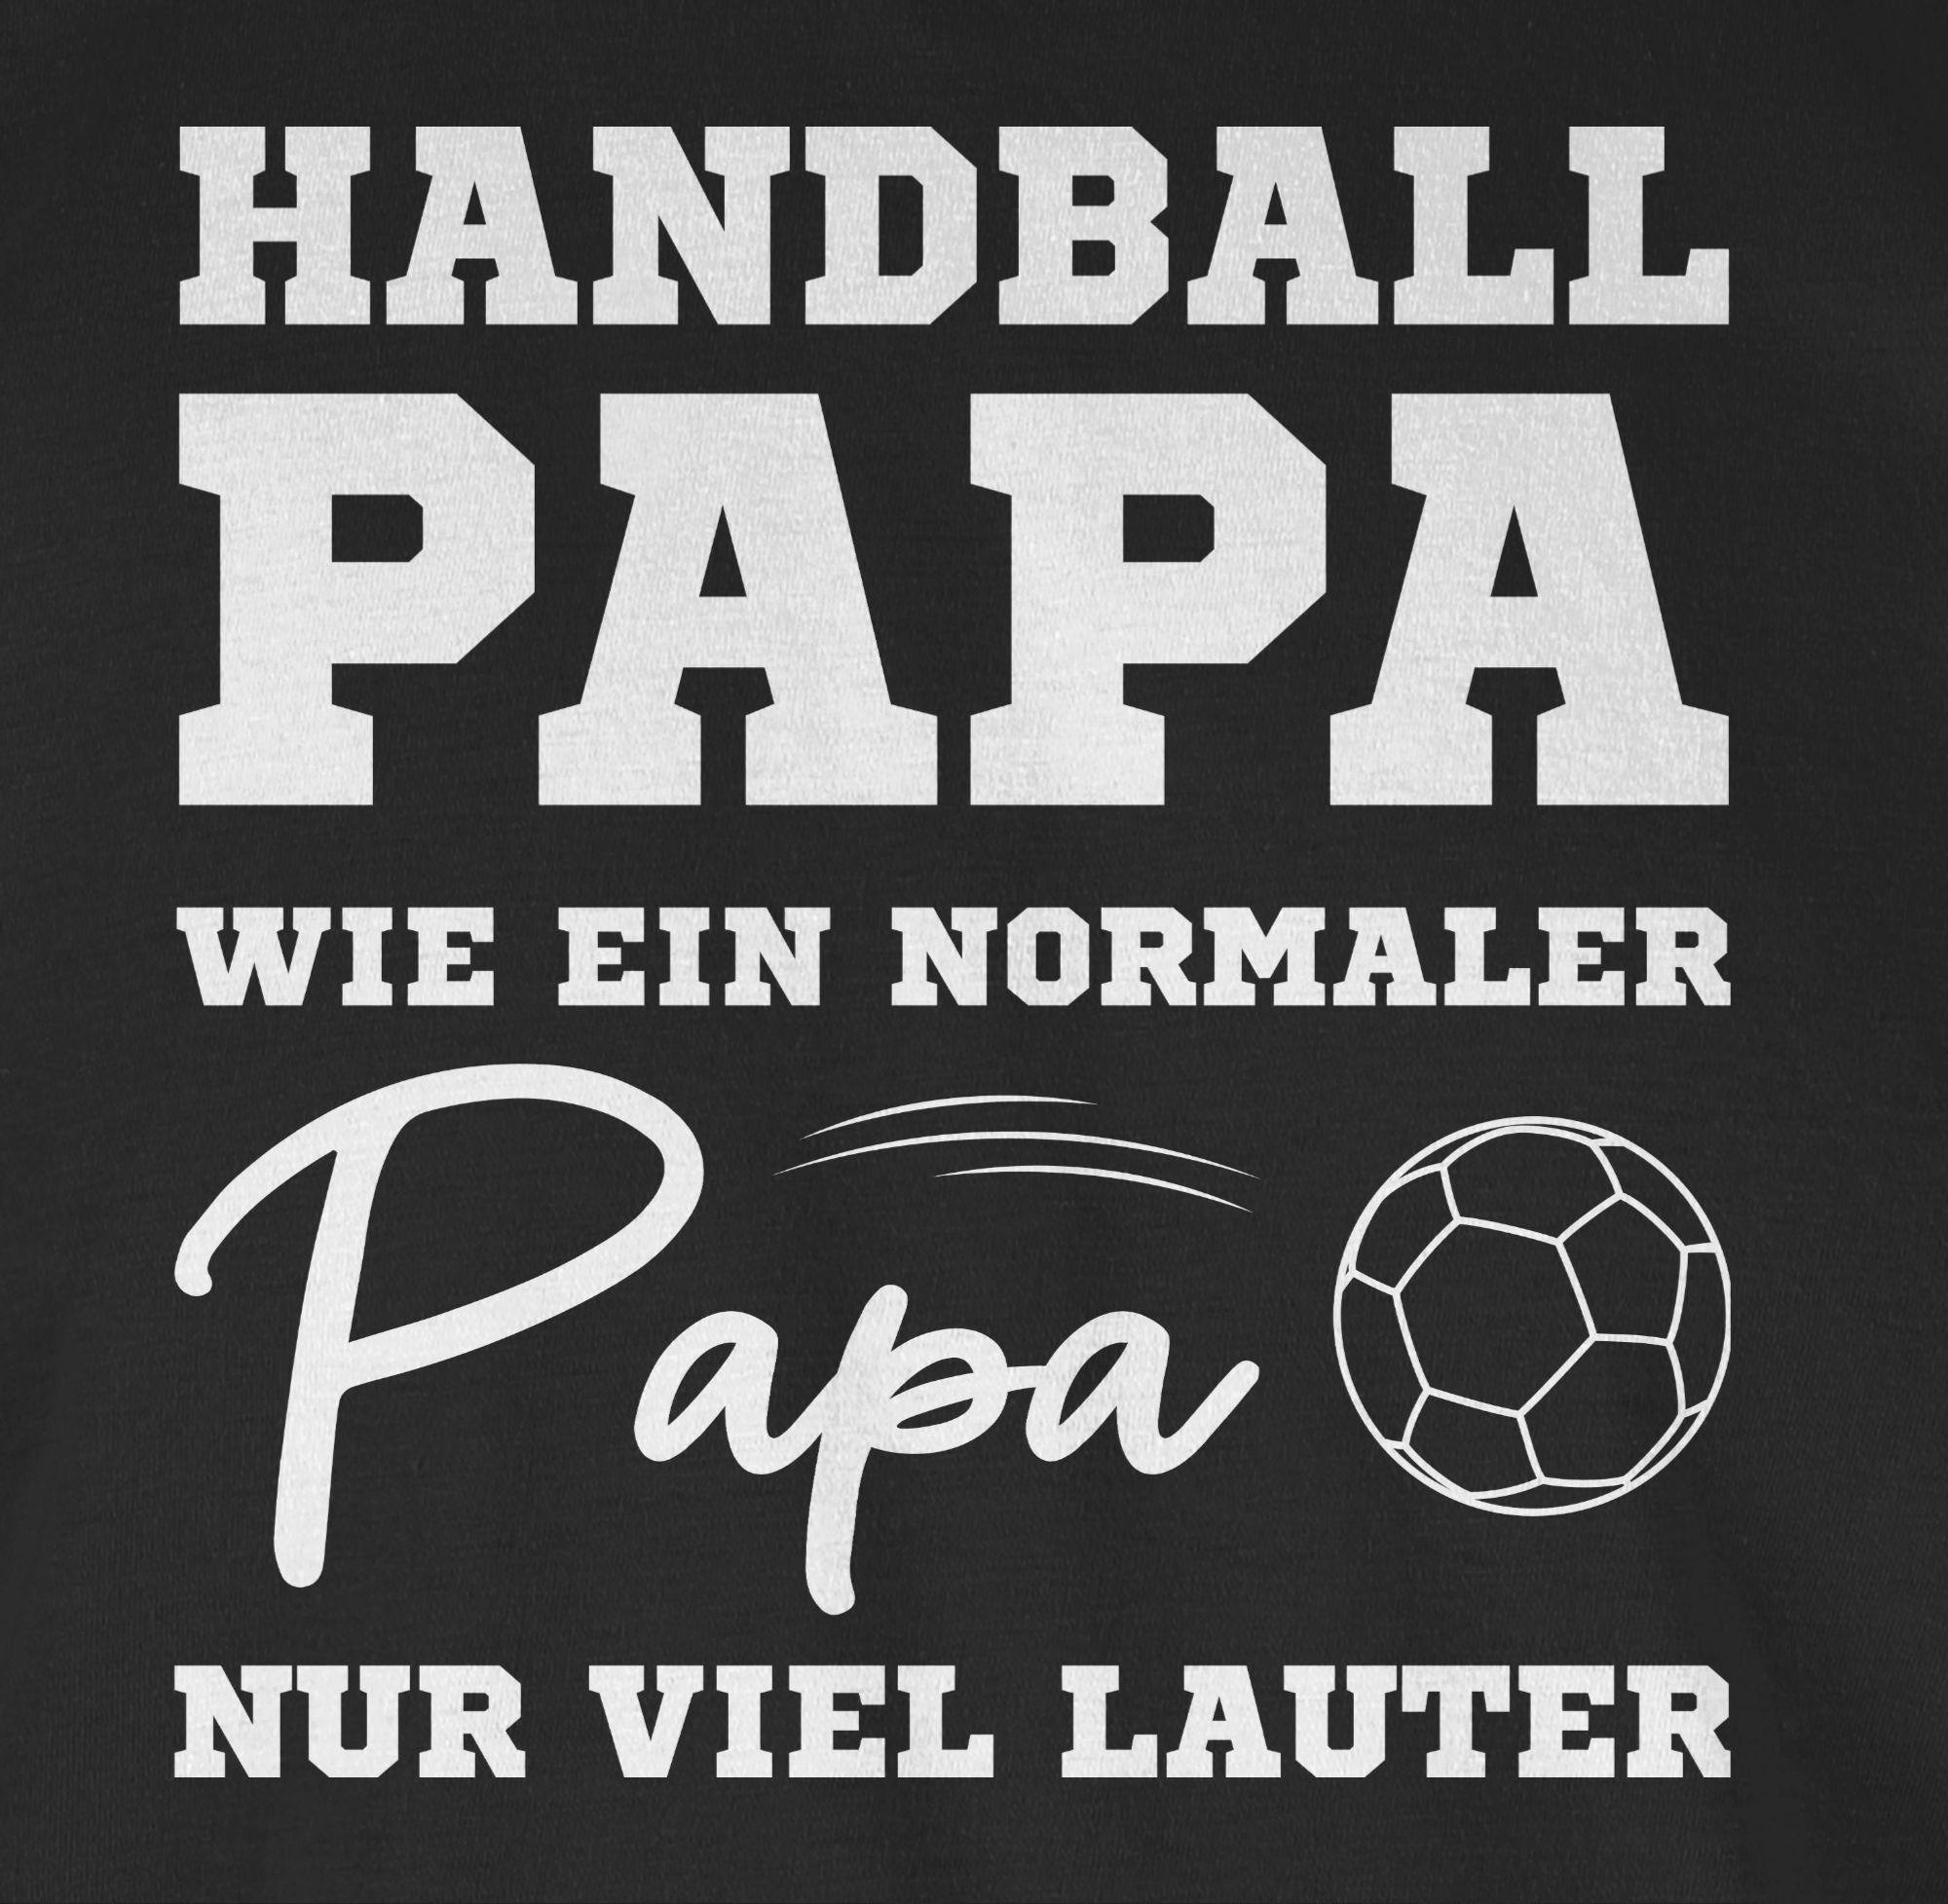 Shirtracer T-Shirt Handball Papa 01 wie Schwarz ein Papa Handball nur normaler 2023 Ersatz WM lauter viel weiß Trikot